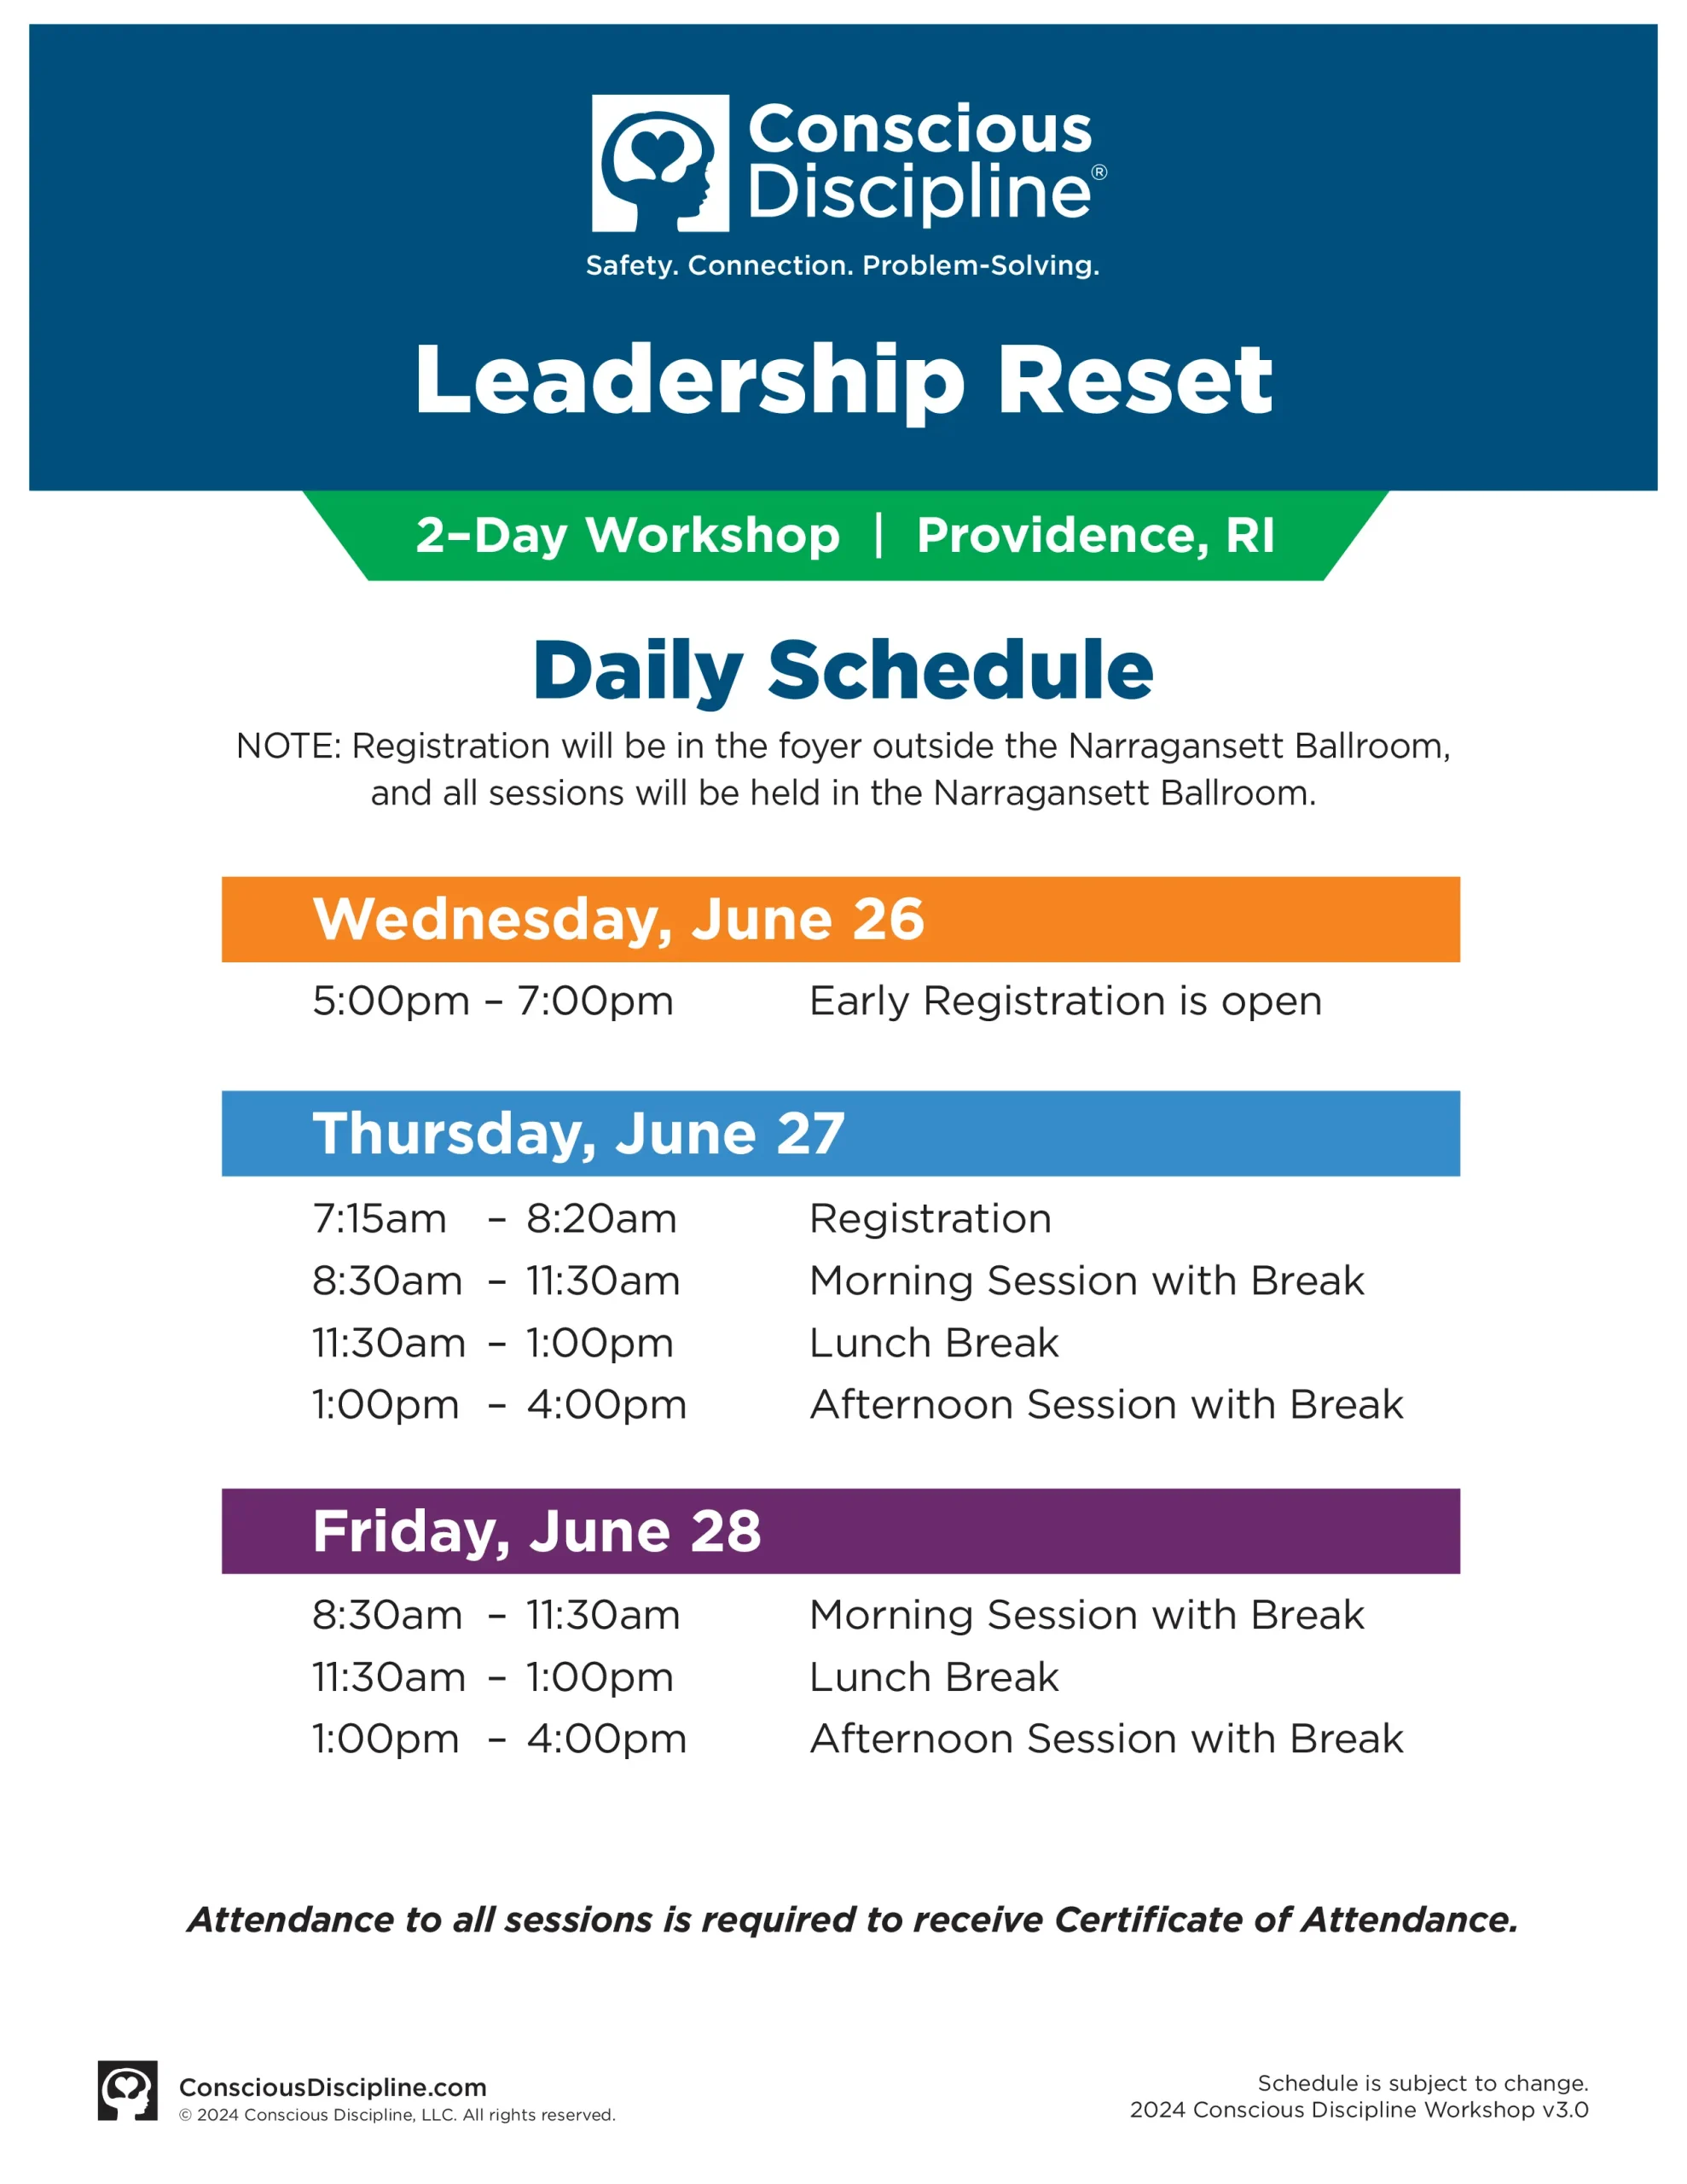 Leadership Reset Professional Development event schedule